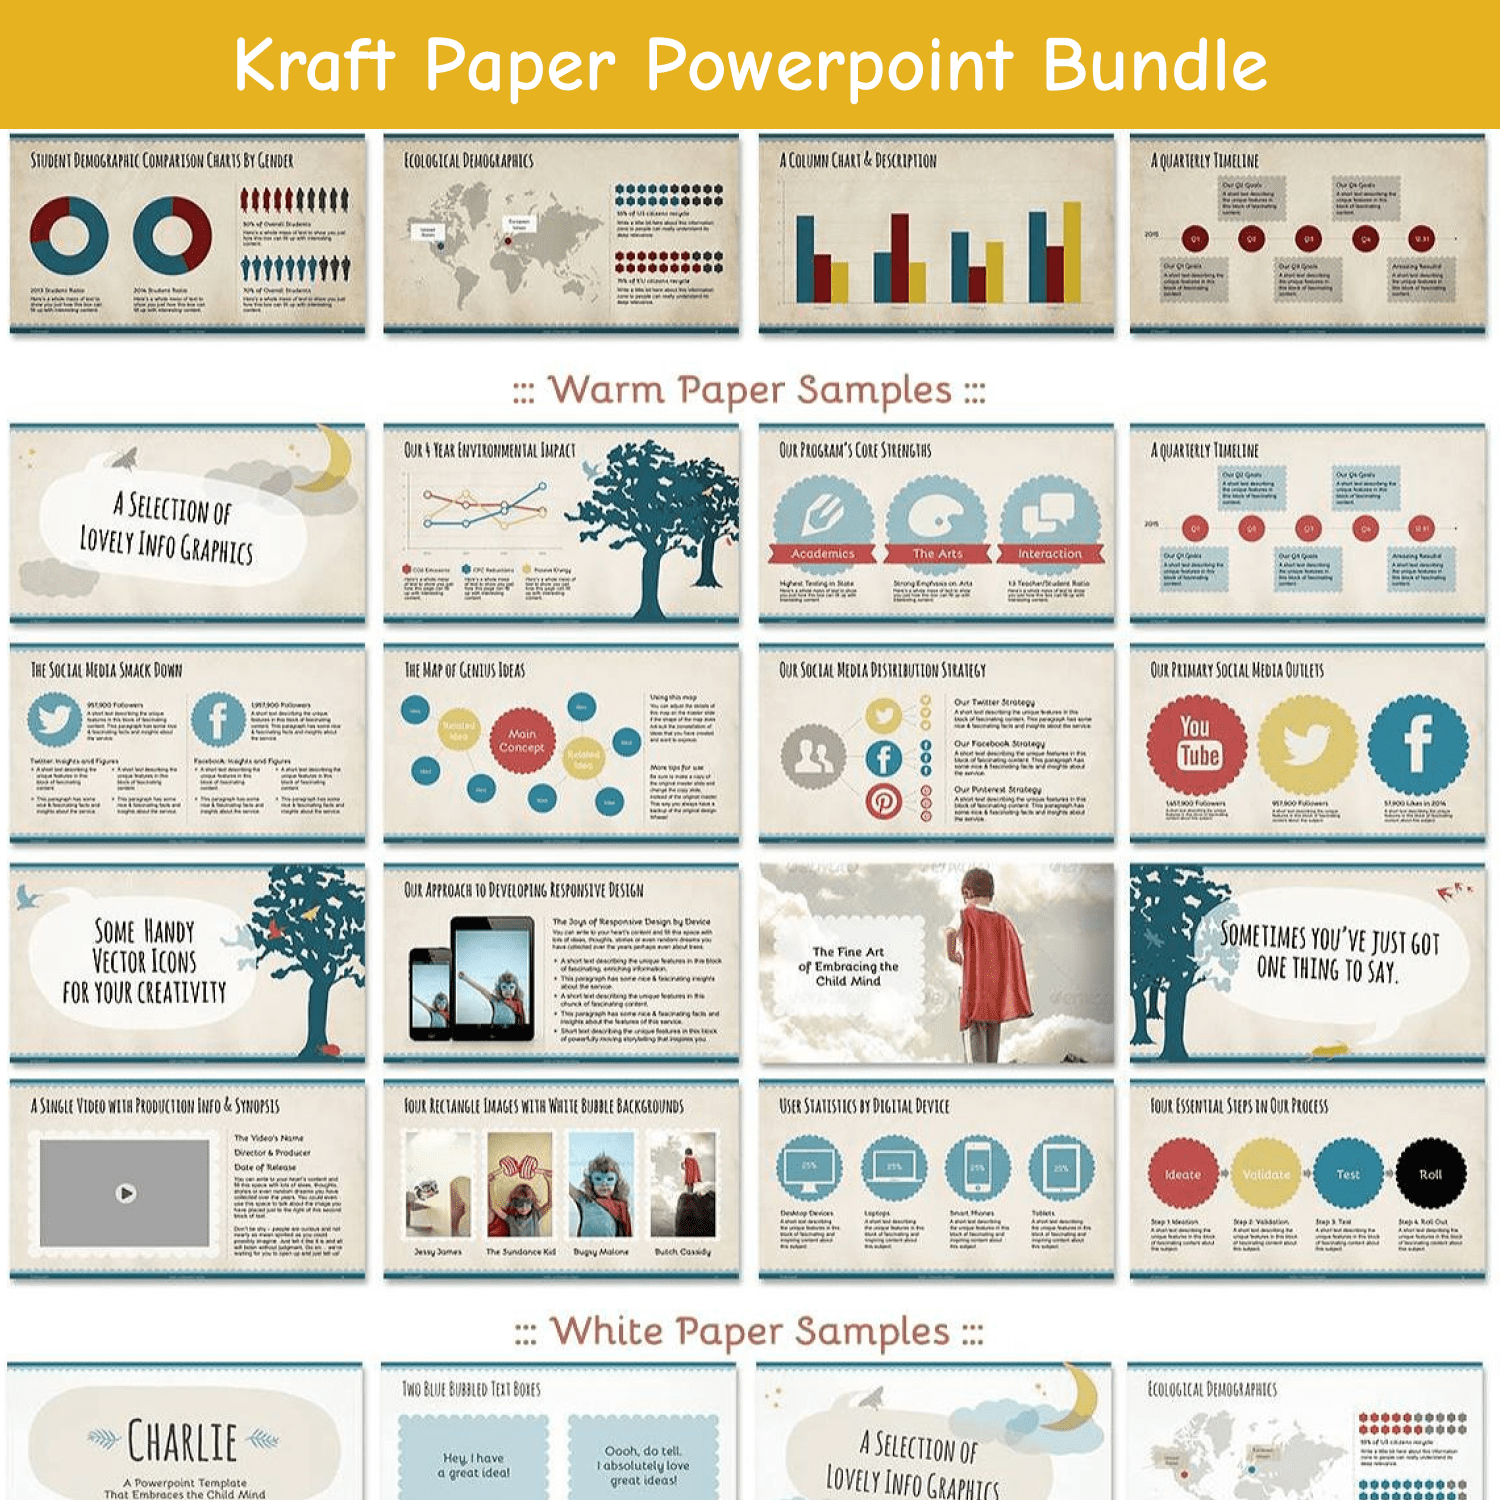 kraft paper powerpoint bundle cover image.